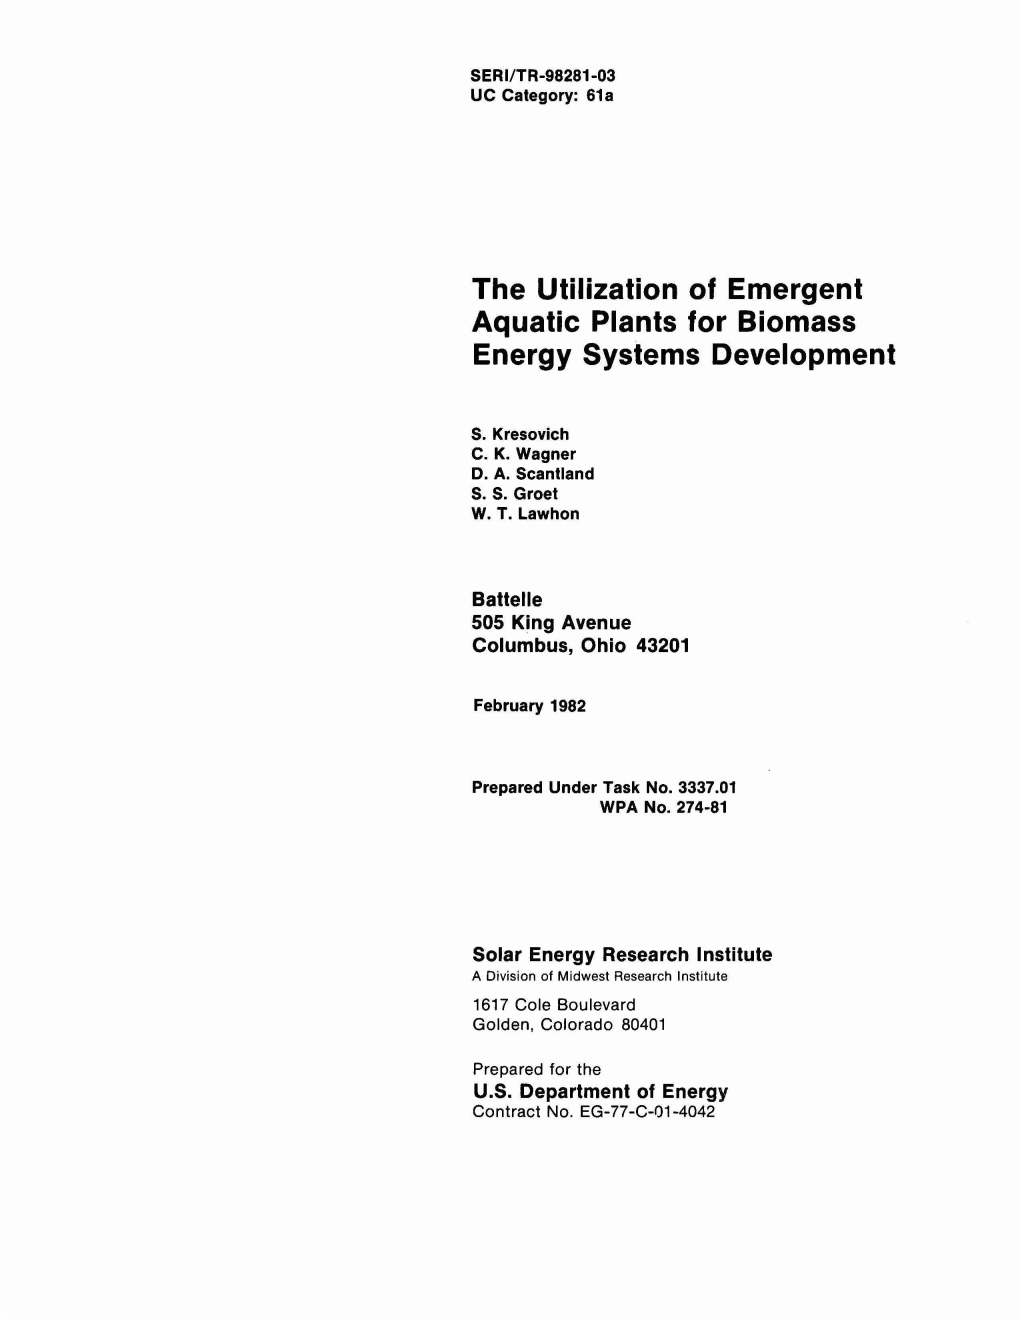 The Utilization of Emergent Aquatic Plants for Biomass Energy Systems Development